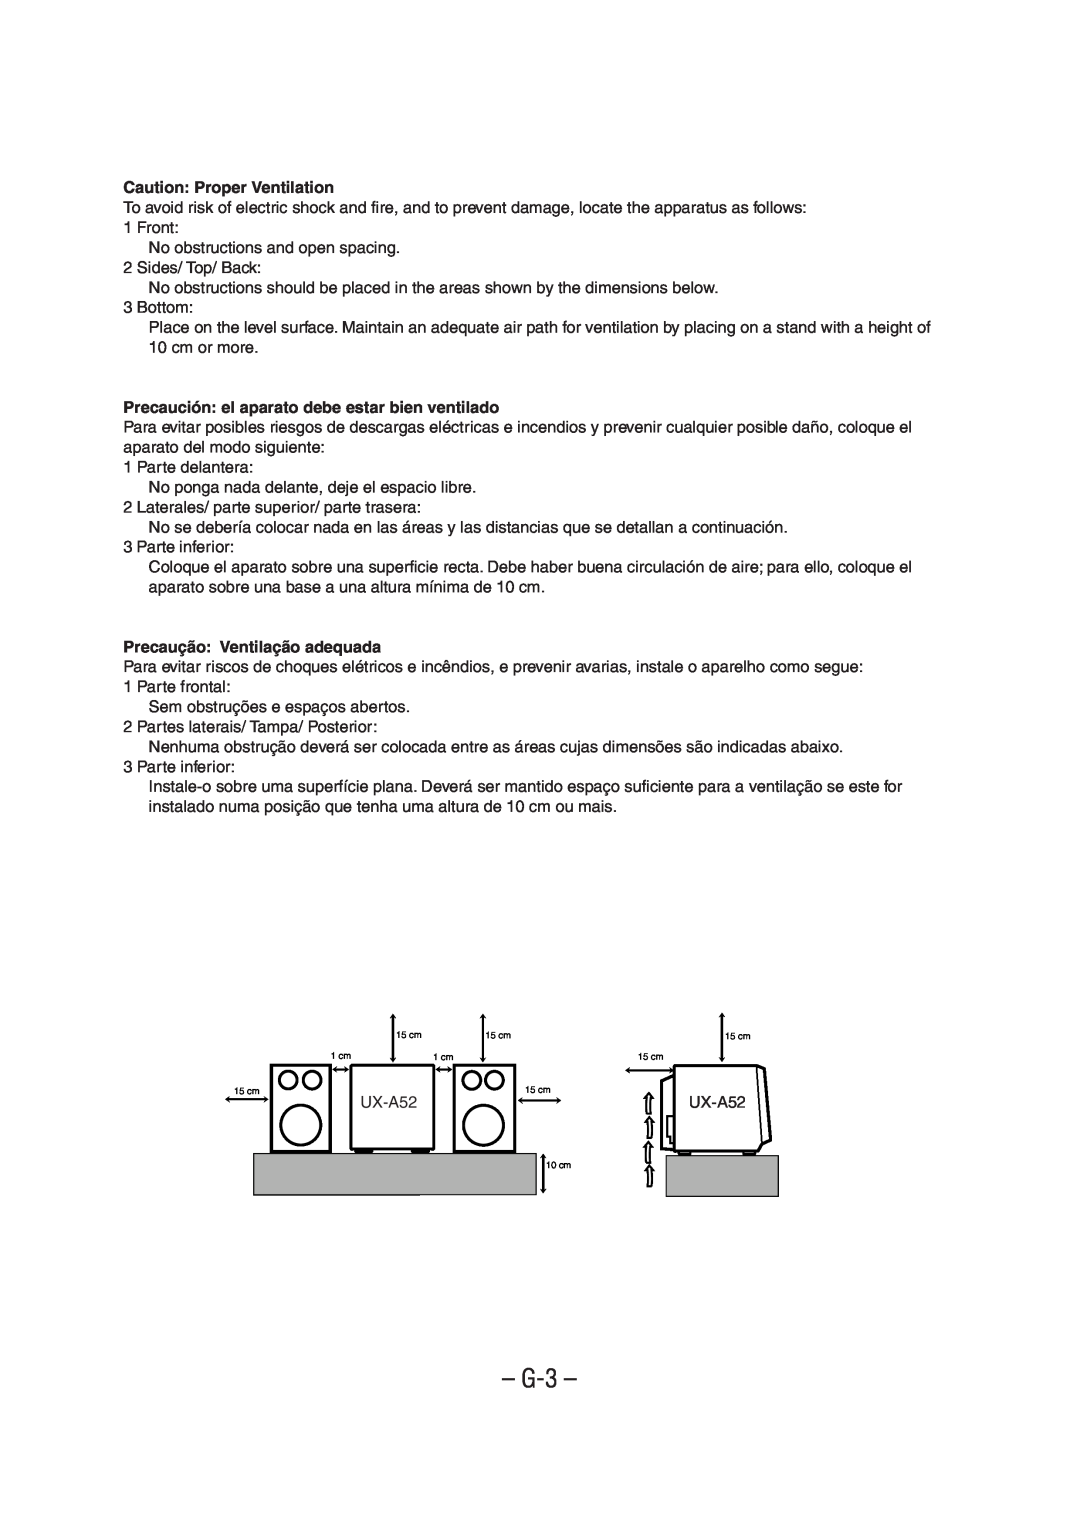 JVC UX-A52 Precaución el aparato debe estar bien ventilado, Precaução Ventilação adequada, G-3, Caution Proper Ventilation 